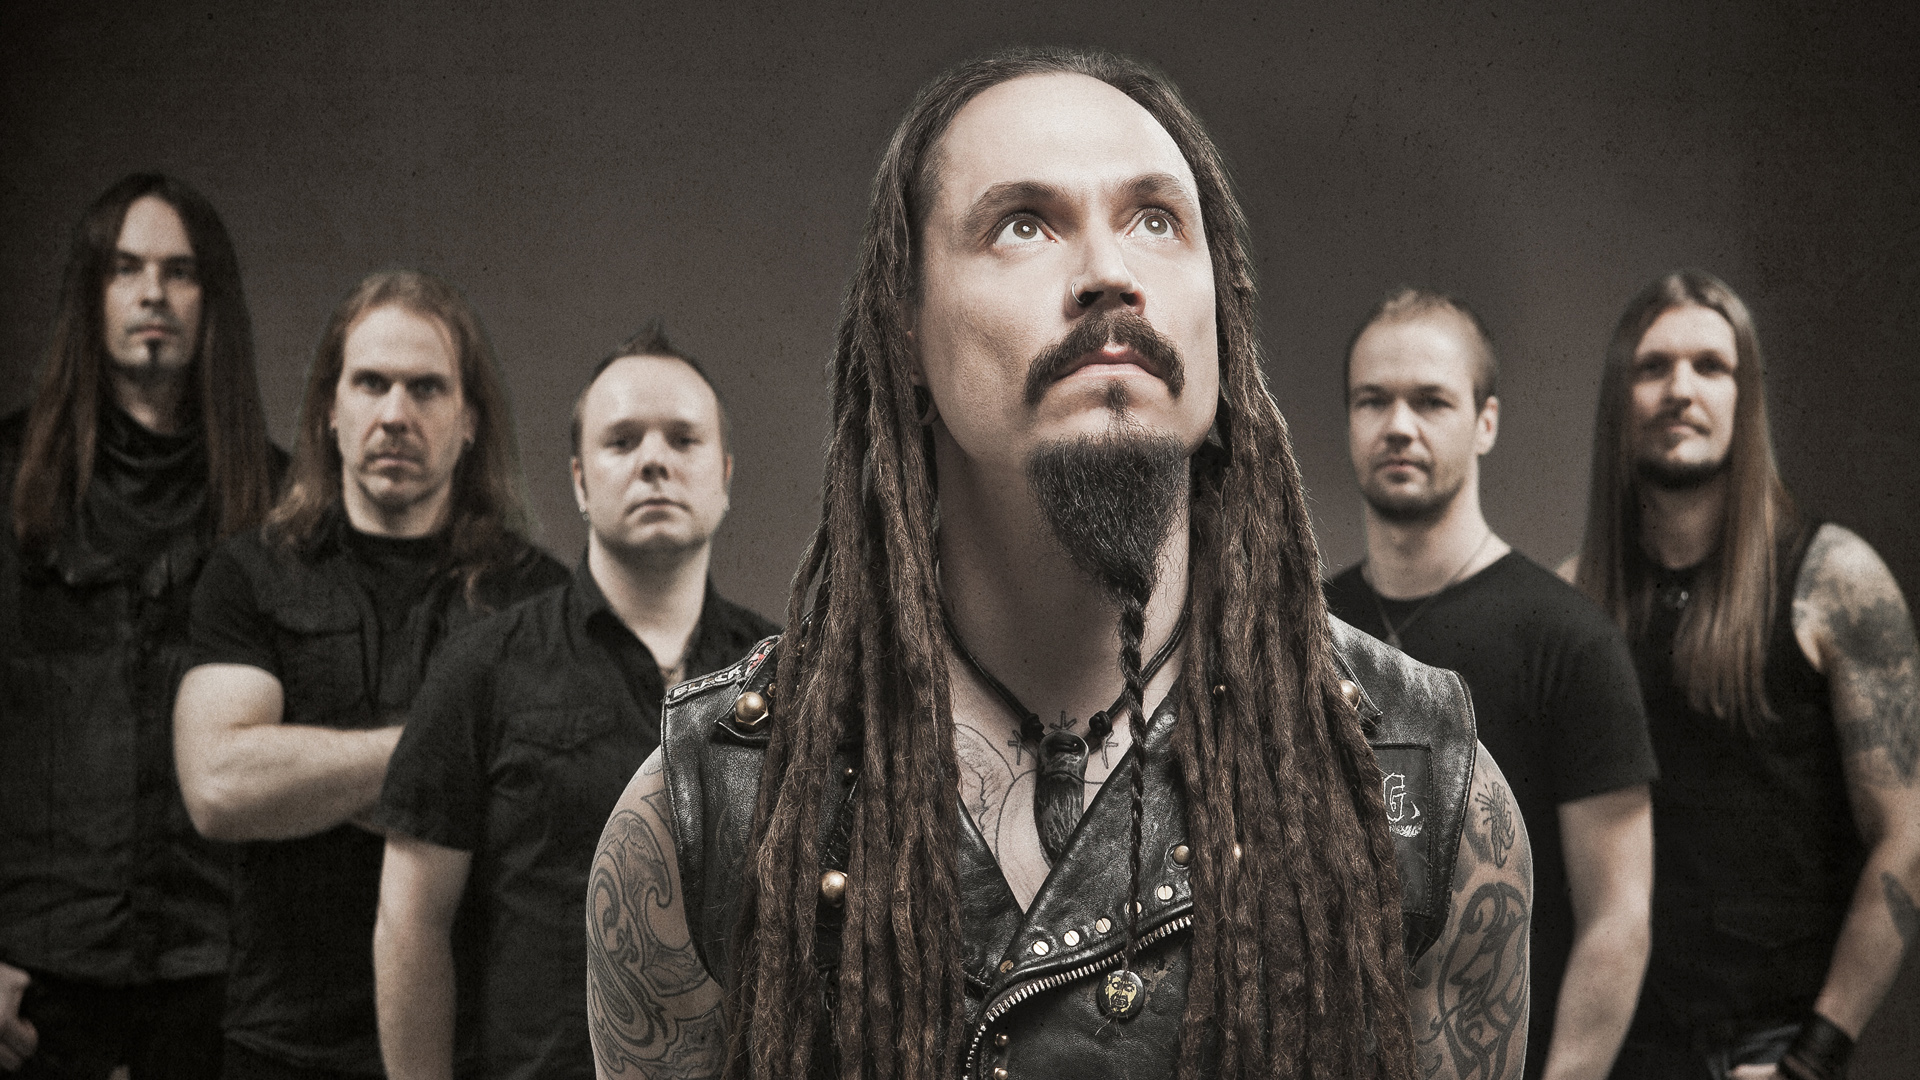 People 1920x1080 music band metal men beard folk metal progressive metal heavy metal metal band metal music Amorphis finnish